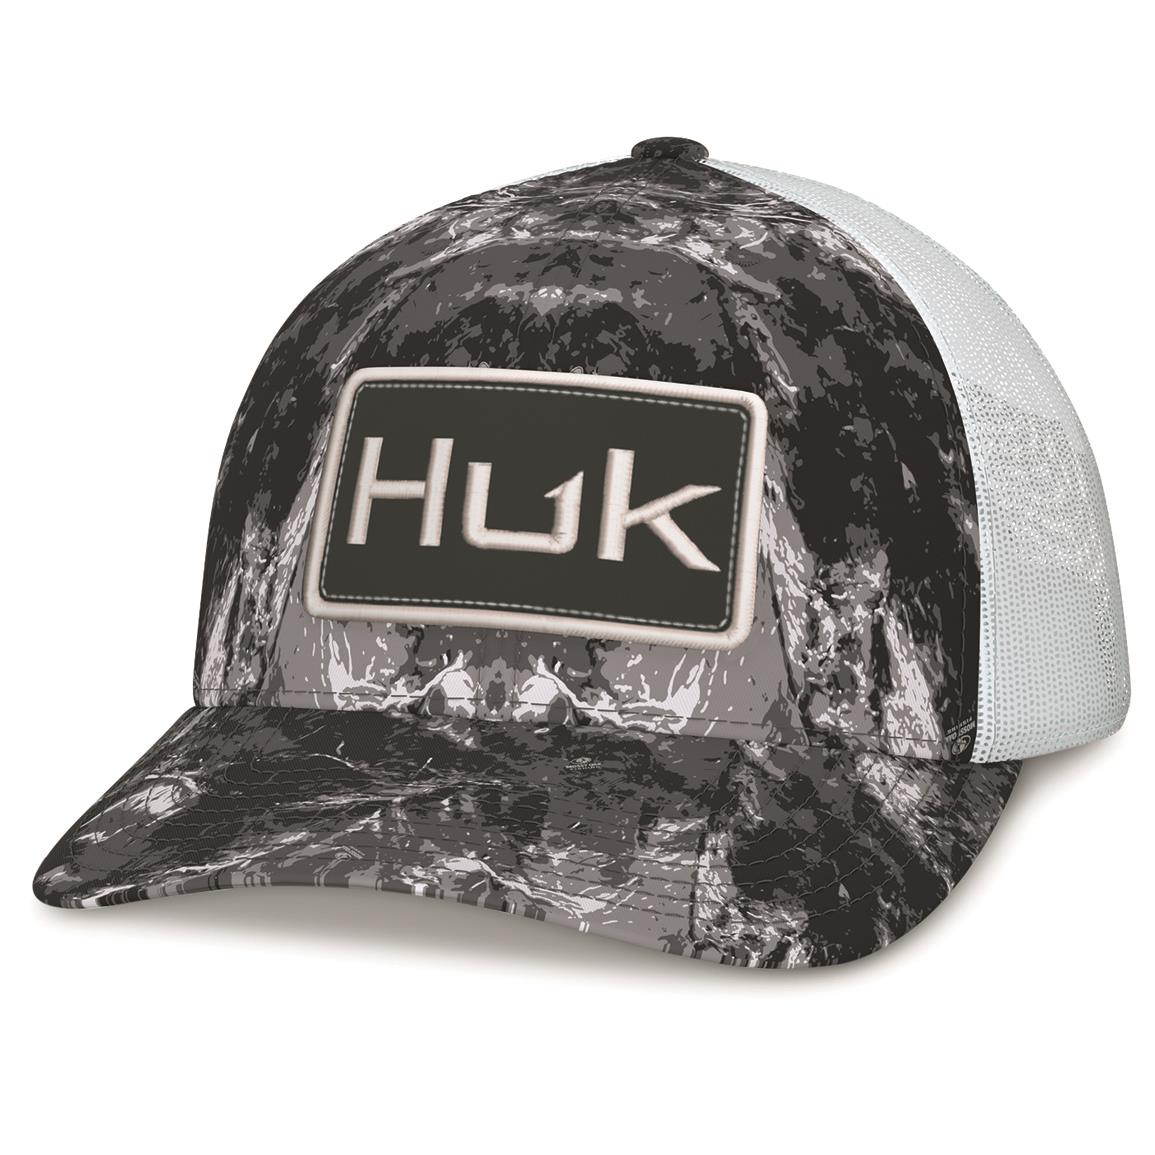 Huk Green Fishing Hats & Headwear